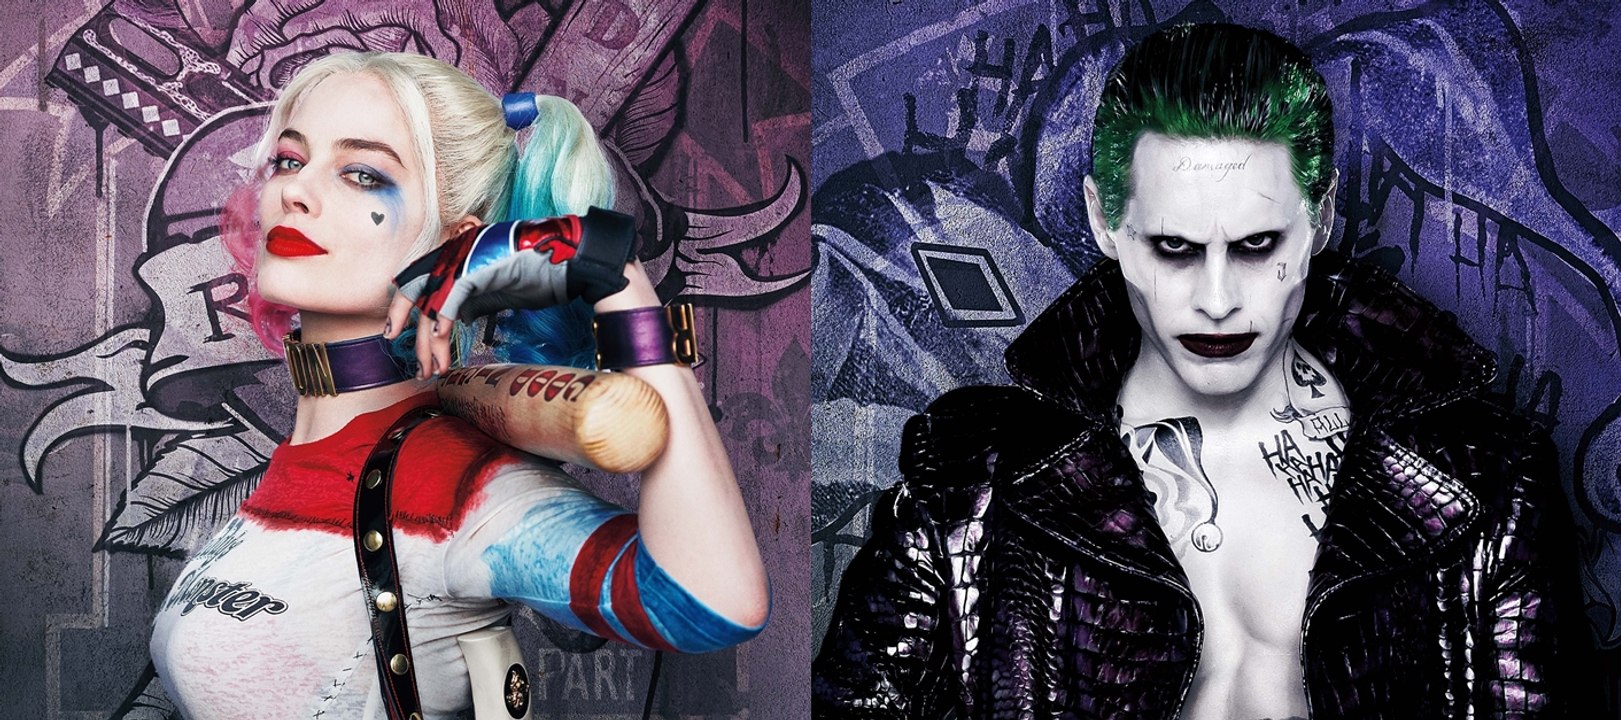 Suicide Squad - Harley Quinn & The Joker Kissing Scene - Dailymotion Video